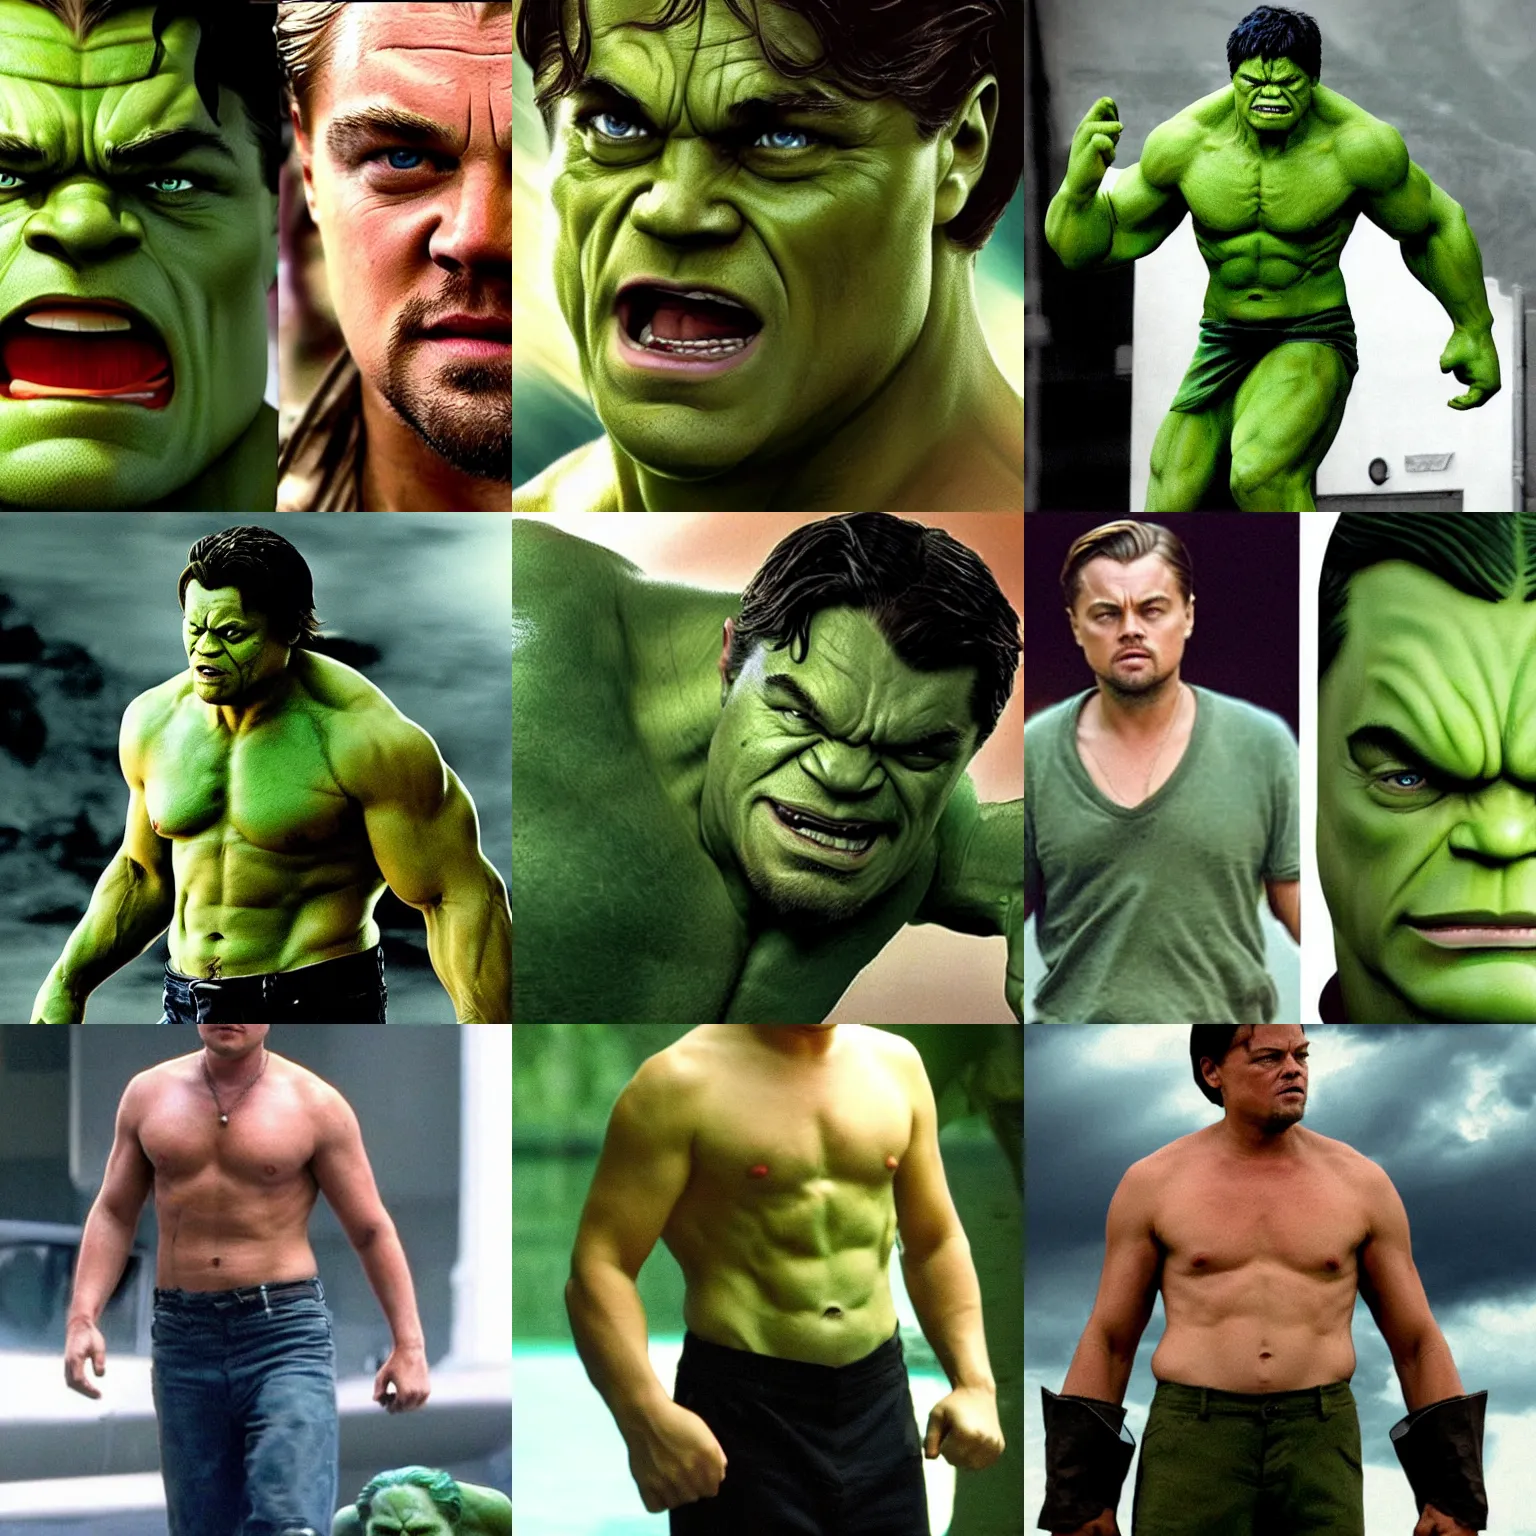 Prompt: Leonardo DiCaprio as The Hulk